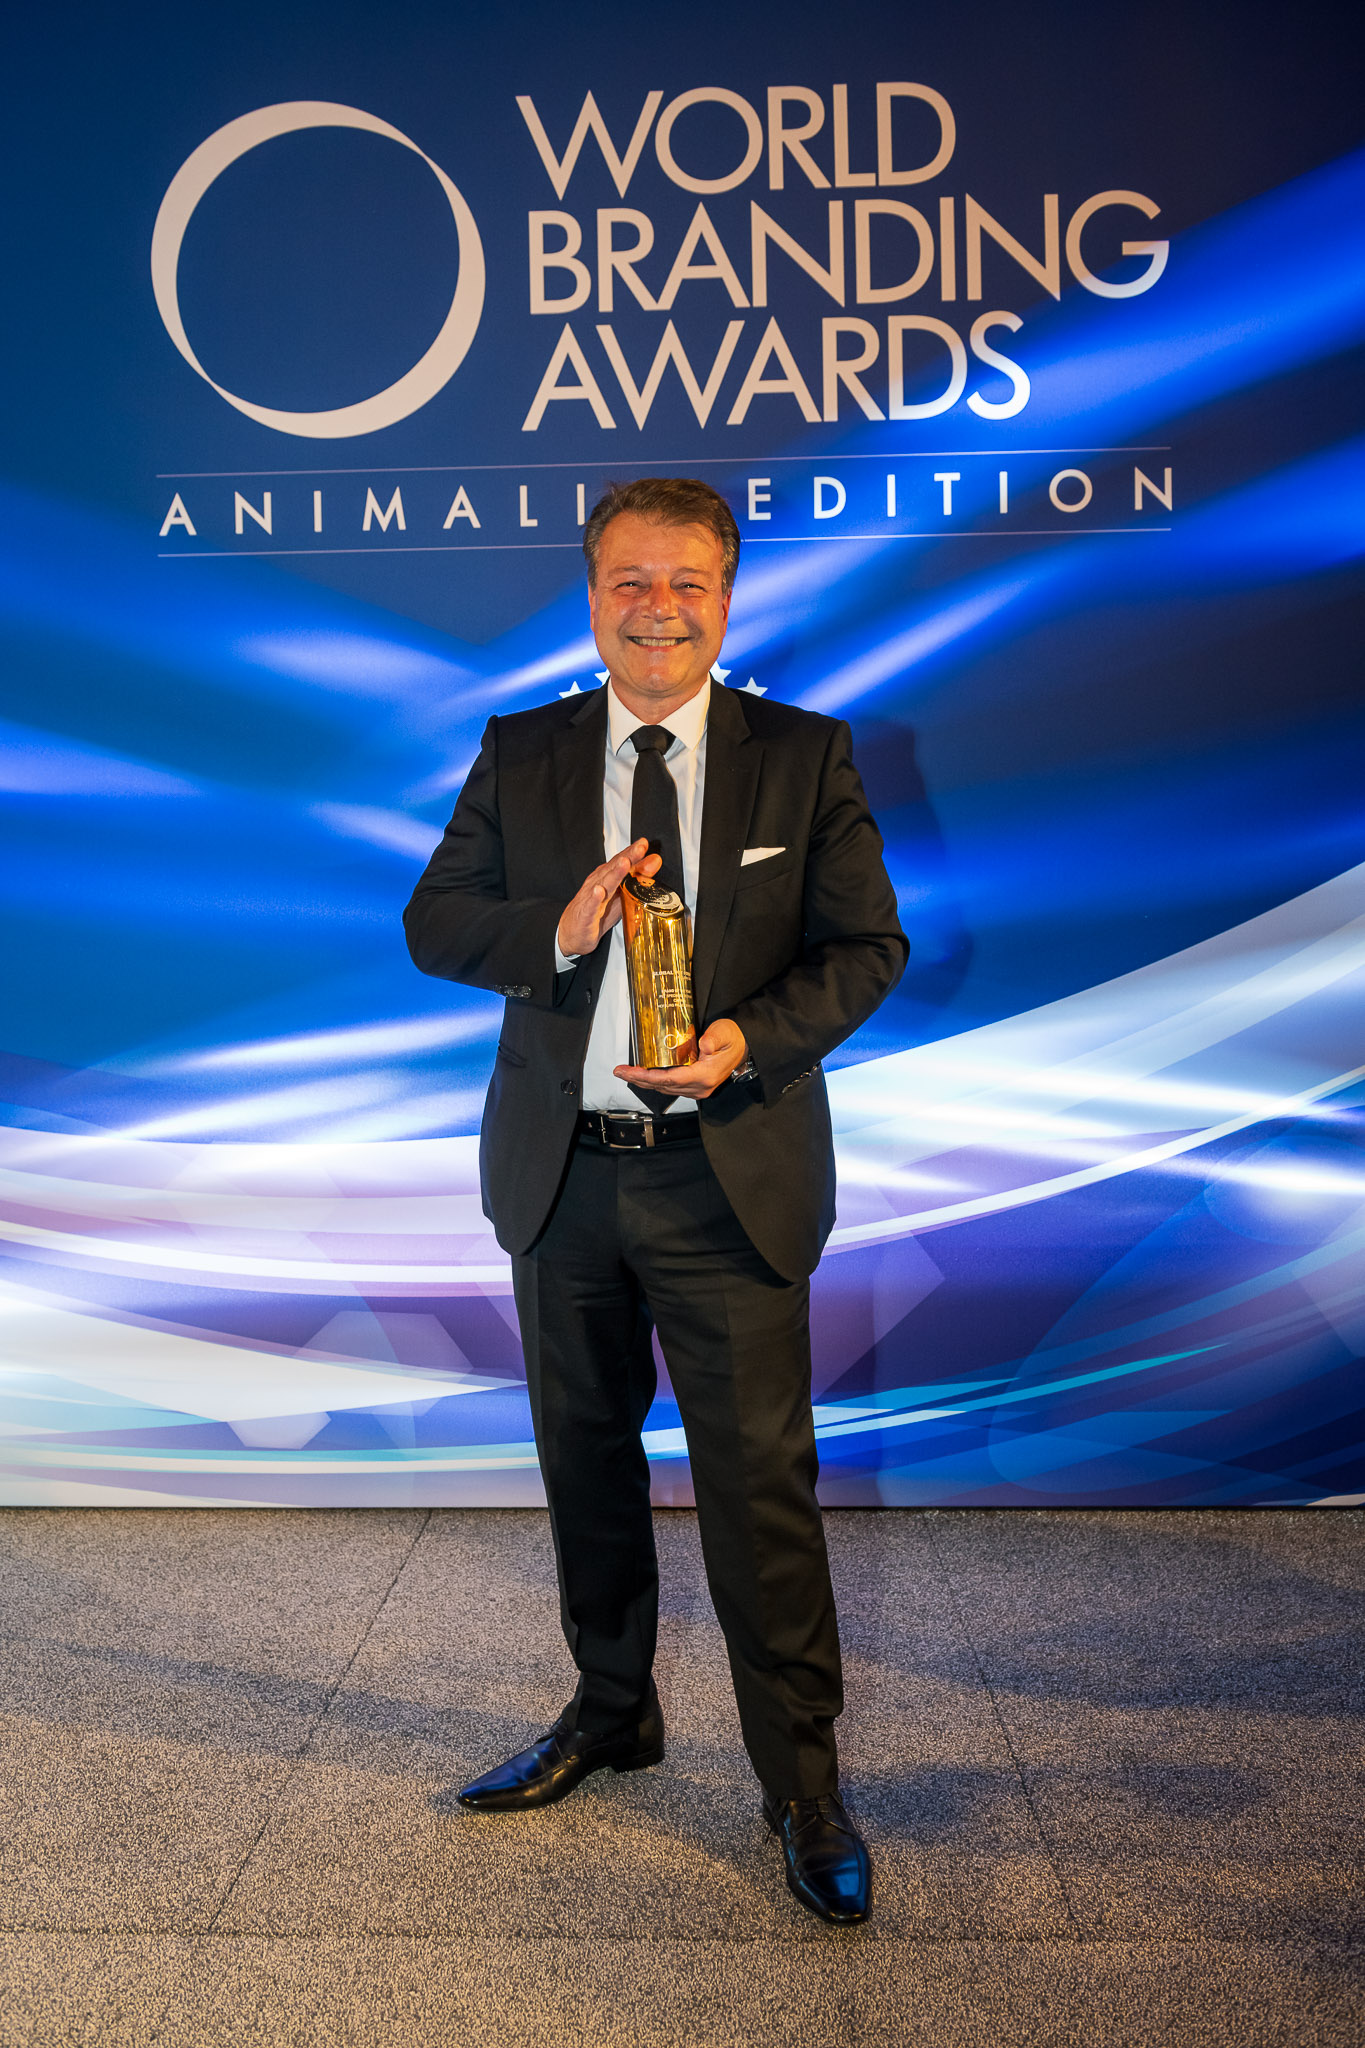 20190703_224745_world_branding_awards_animalis_8017